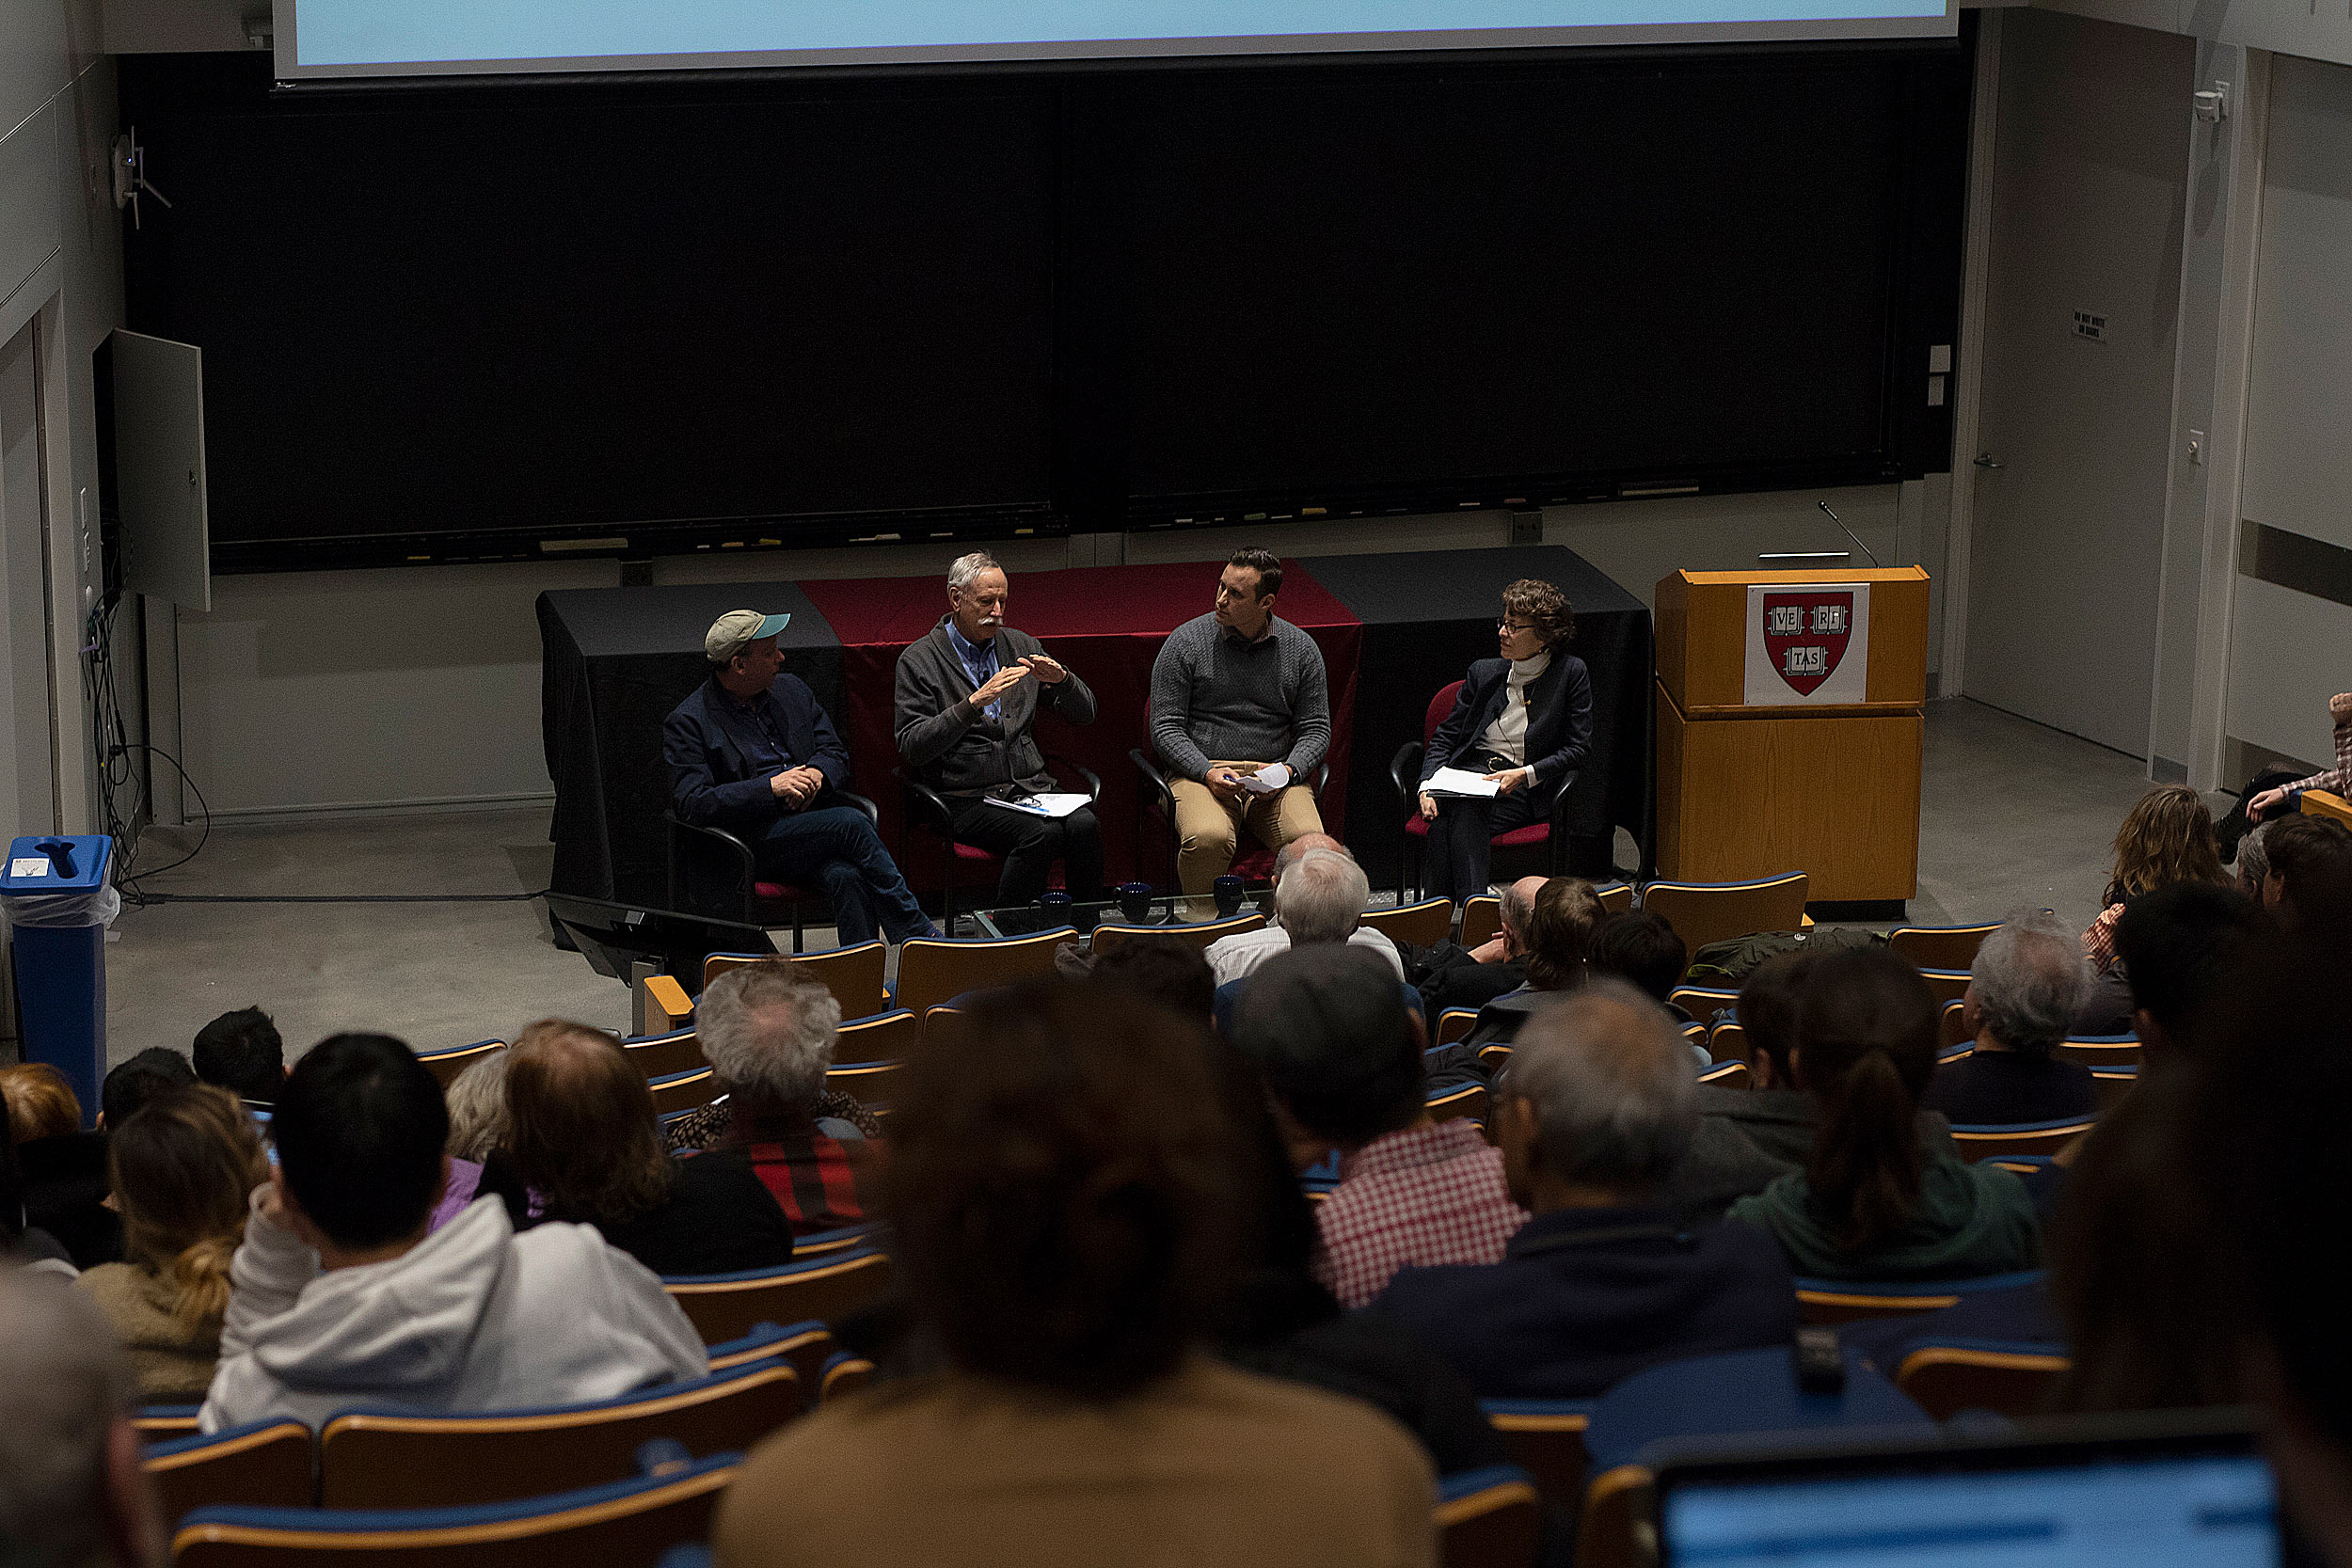 From left to right, Paul Greenberg, Professor Walter Willett, Professor Christopher Golden, and Professor Susan Korrick.